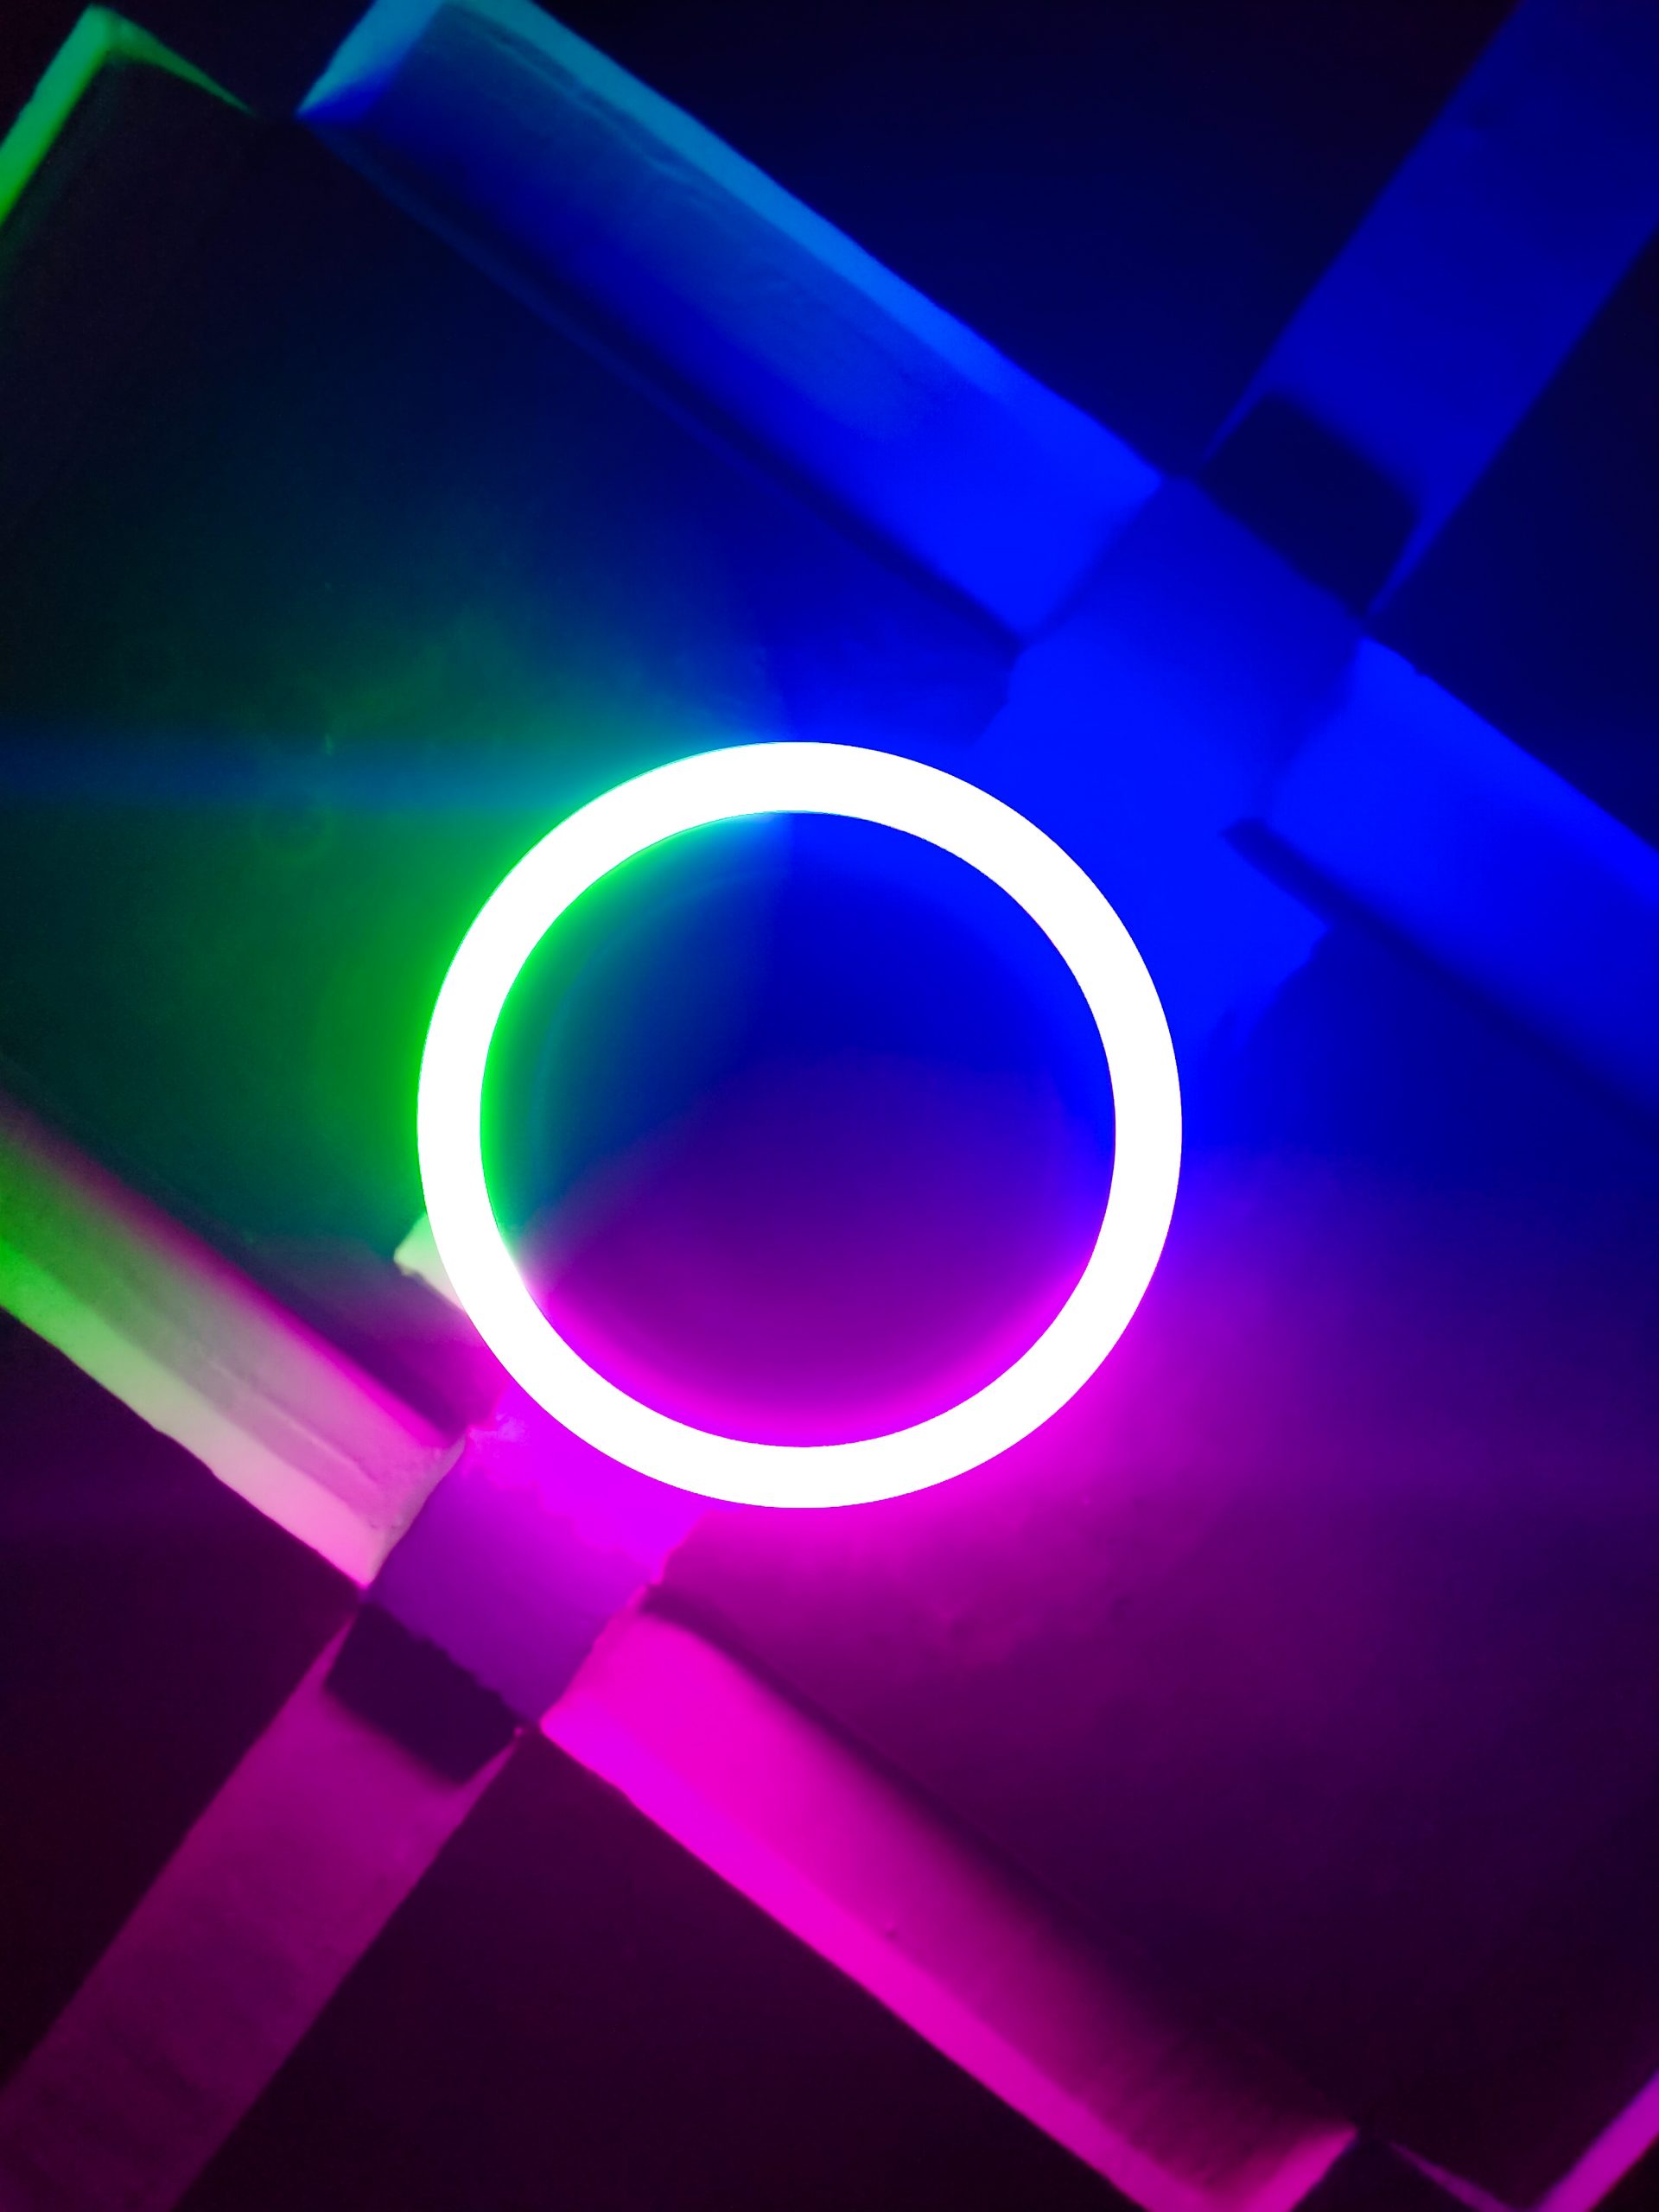 A led light ring